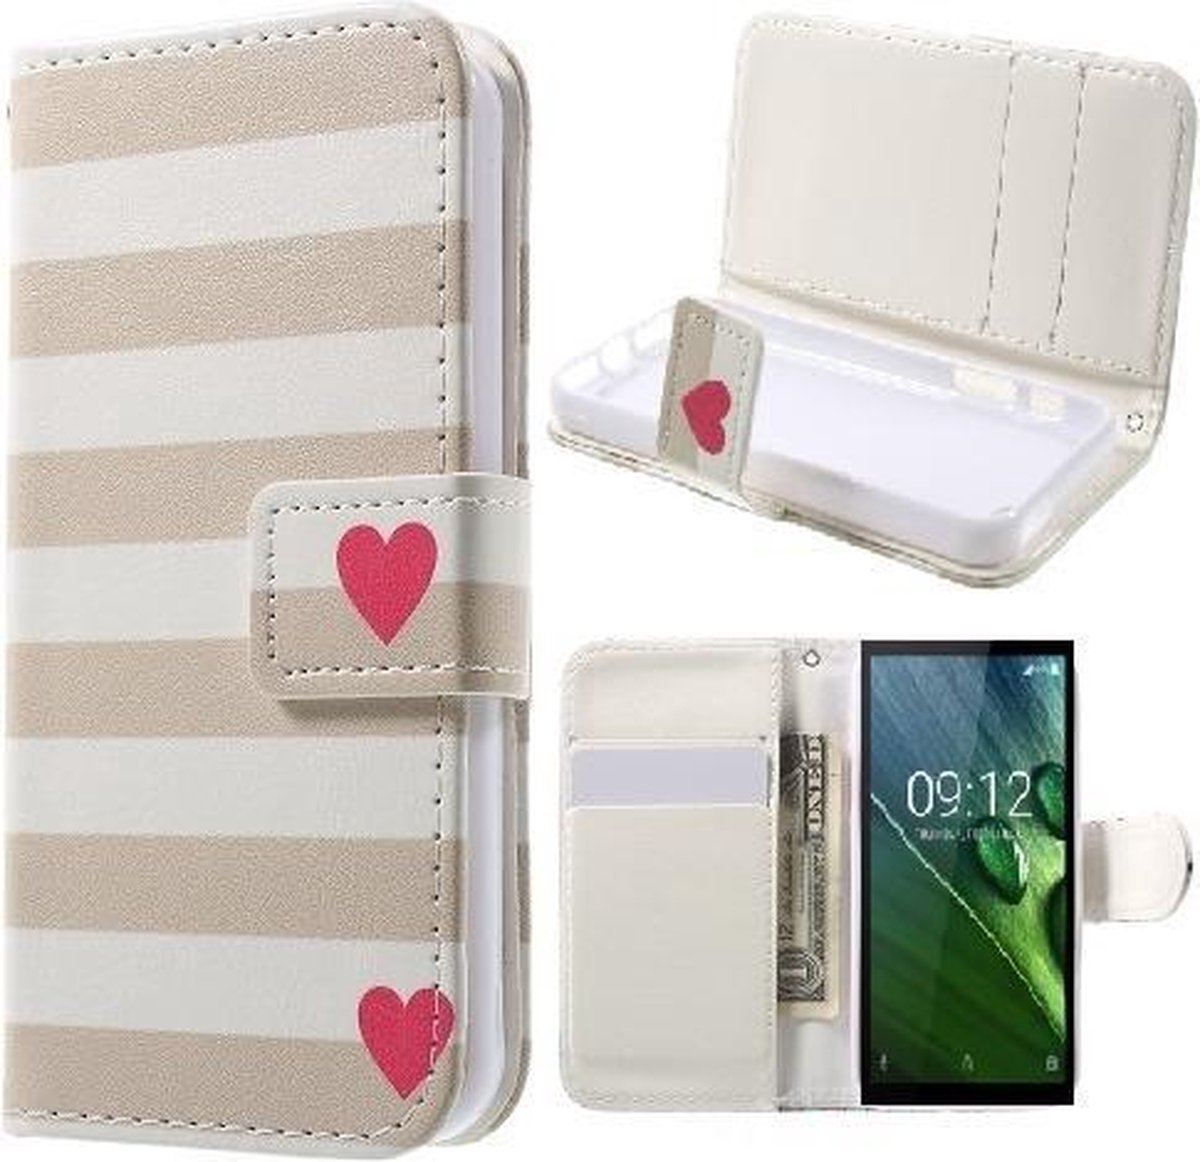 Qissy Stripes And Heart portemonnee case hoesje voor Nokia 3310 2017